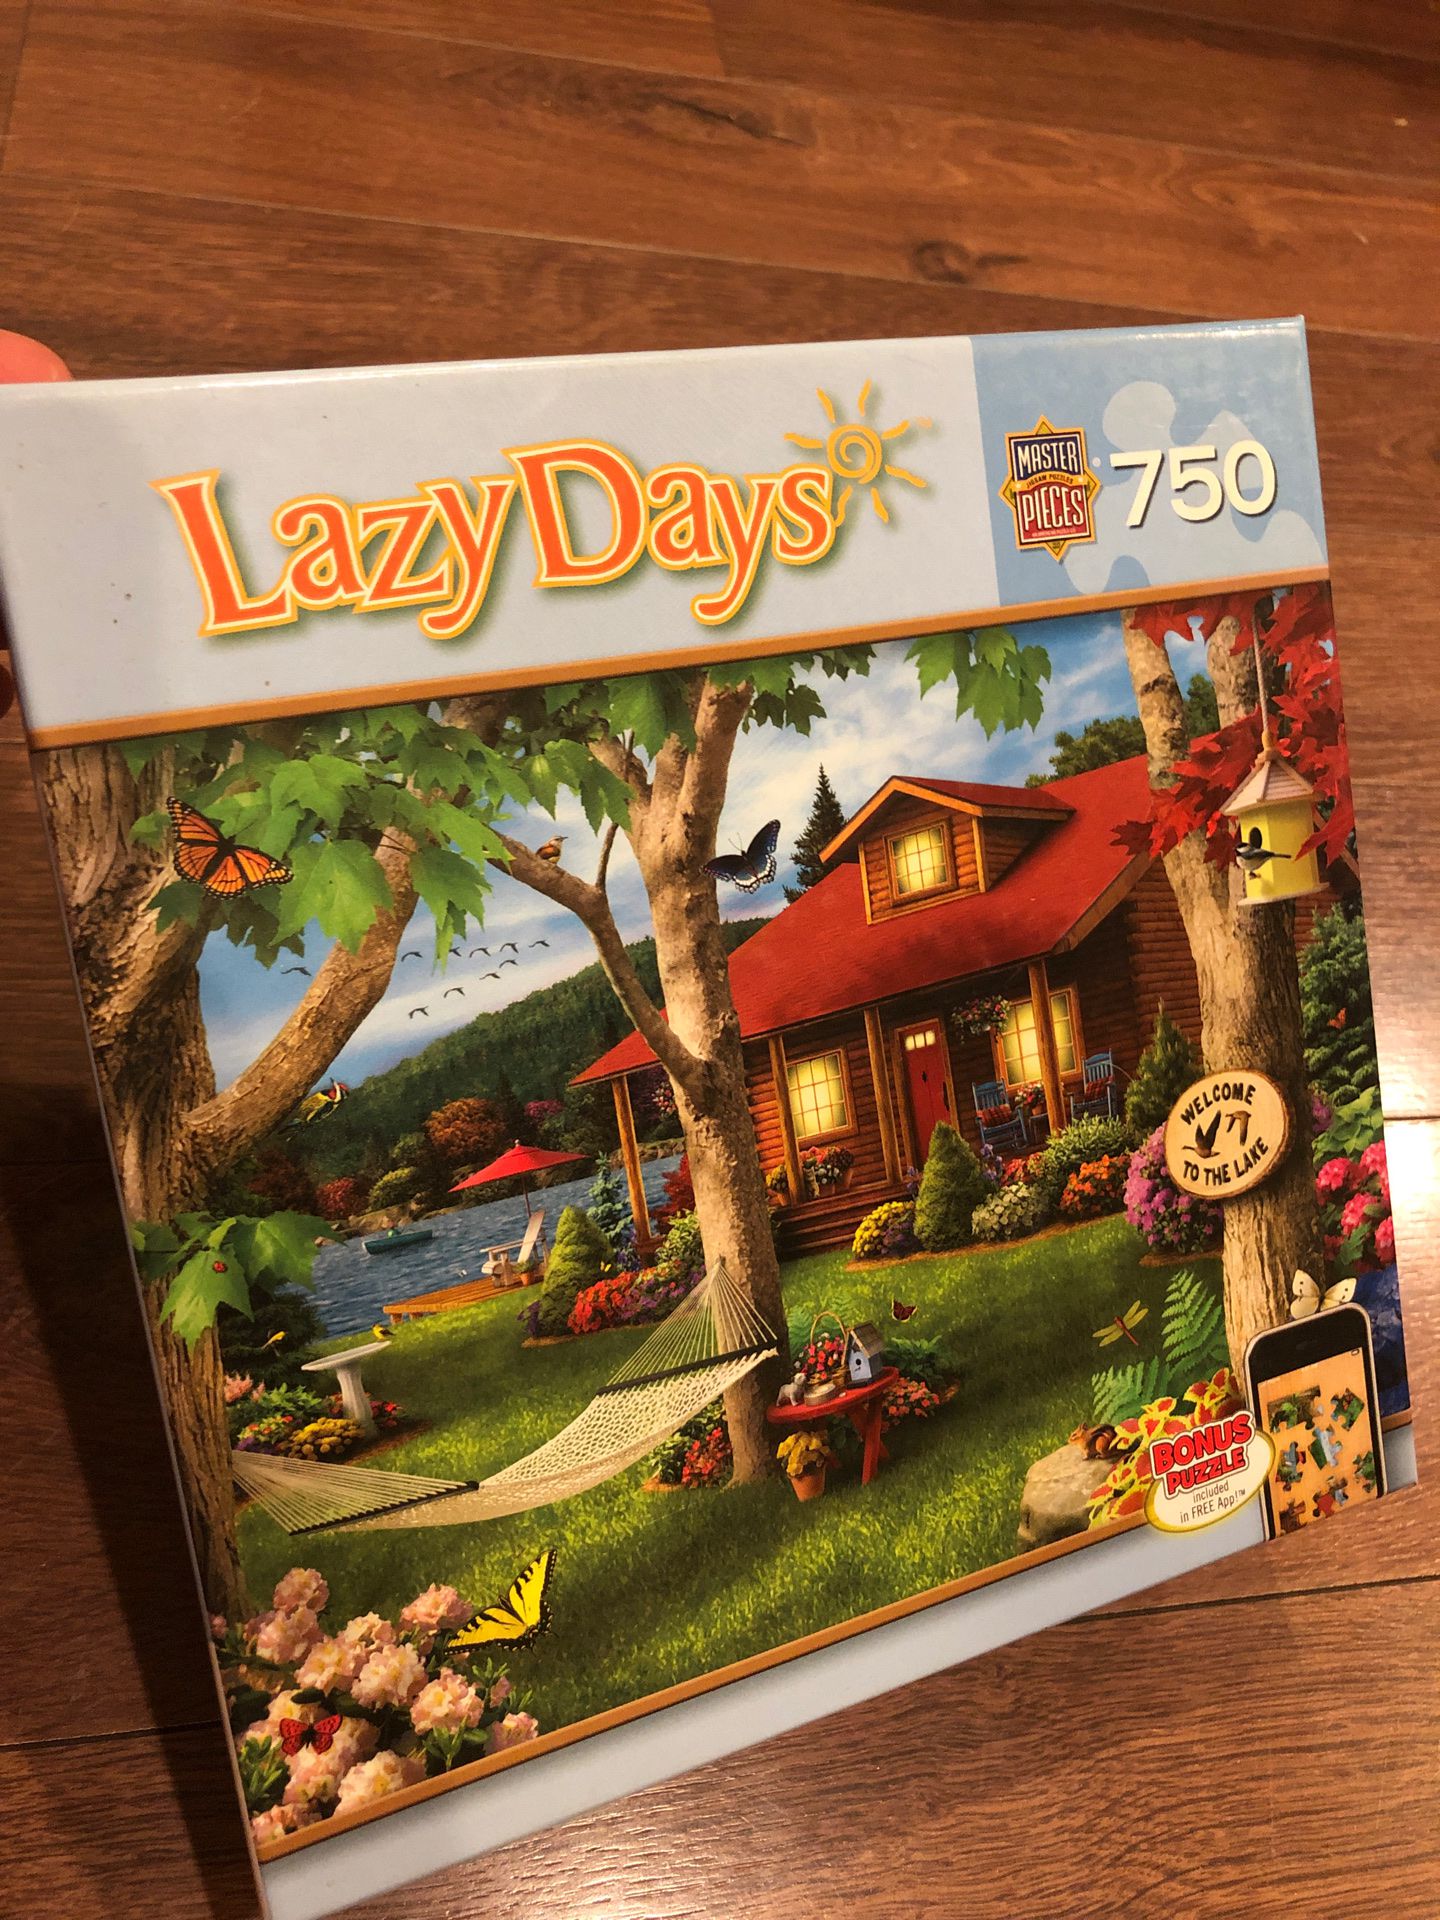 Lazy days puZzle - by masterpieces - 750 pieces - free bonus puzzle